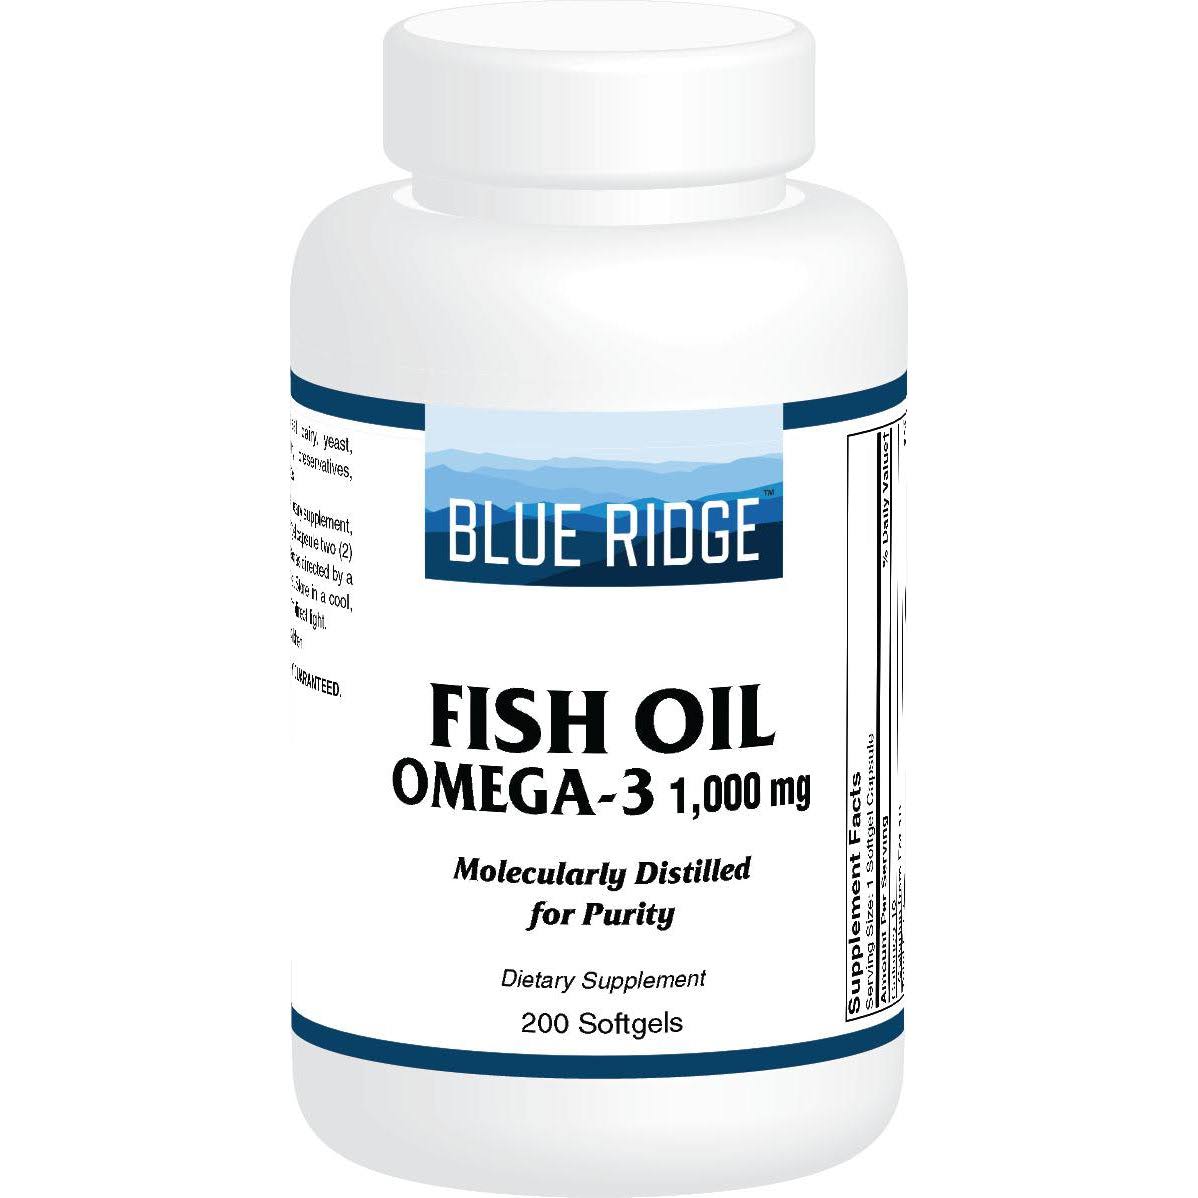 Spring Valley Natural Foods Fish Oil Omega-3 Supplement - 200 Softgels